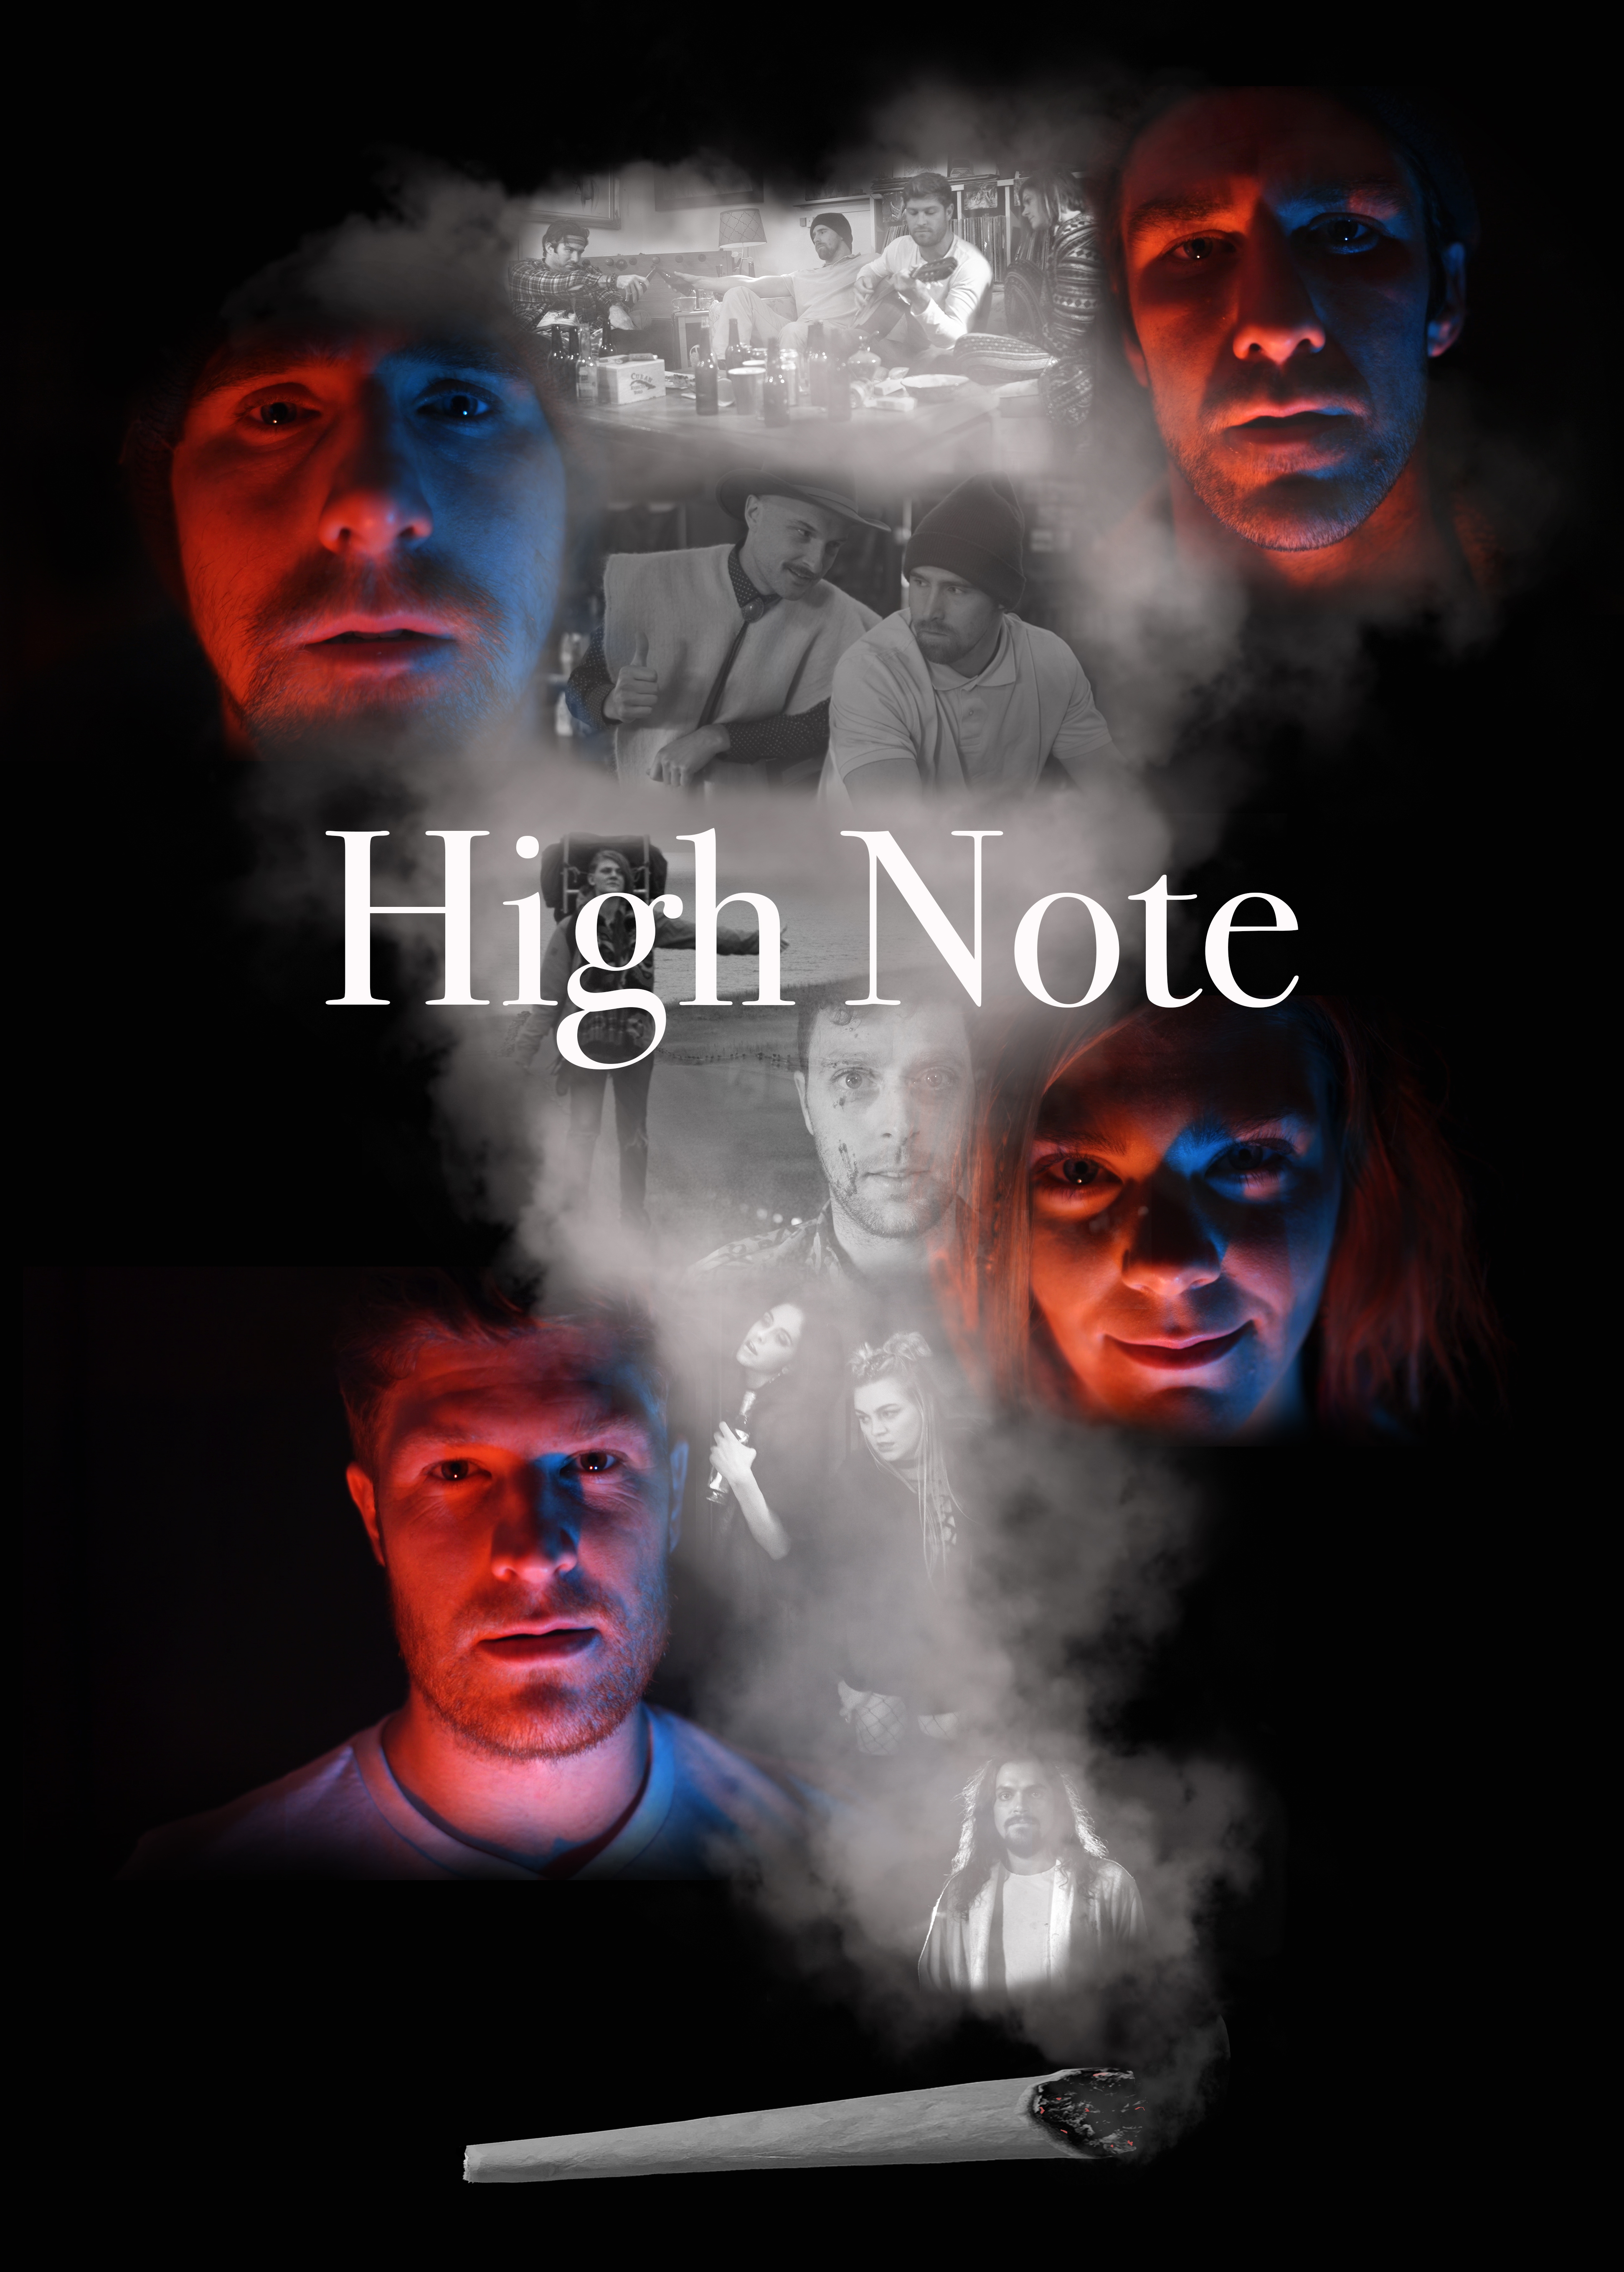 Nonton film High Note layarkaca21 indoxx1 ganool online streaming terbaru